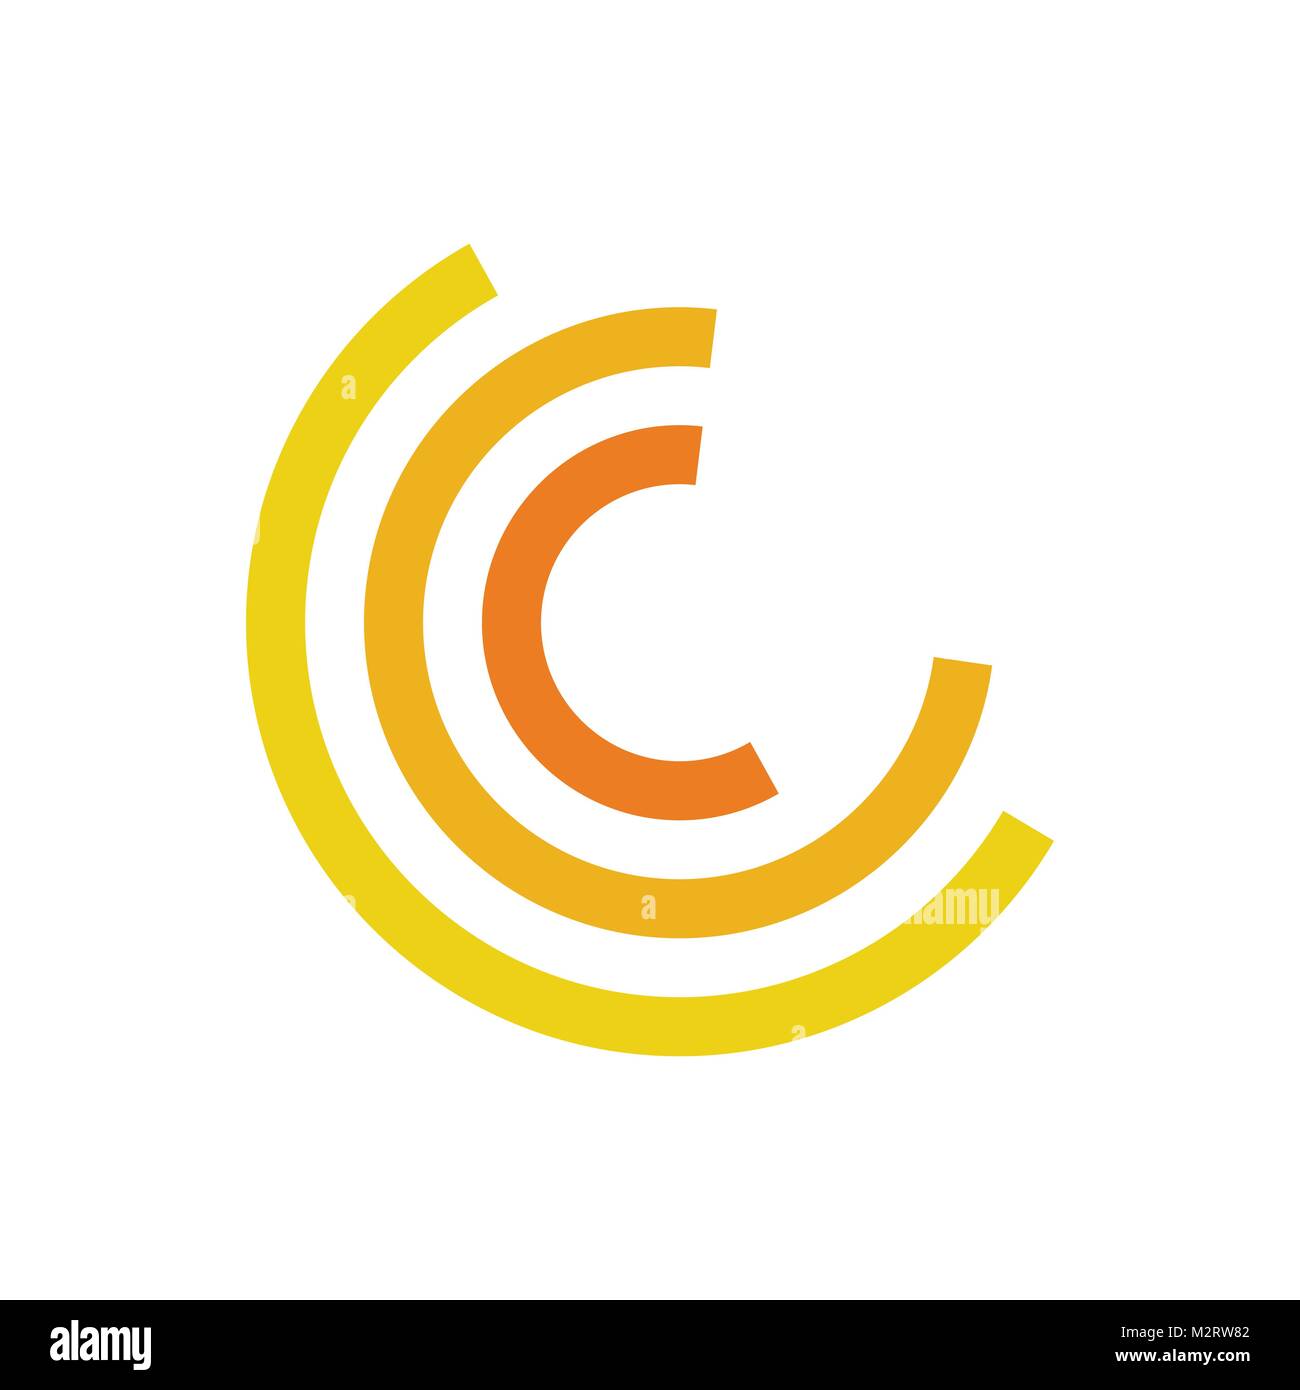 half circle logo design